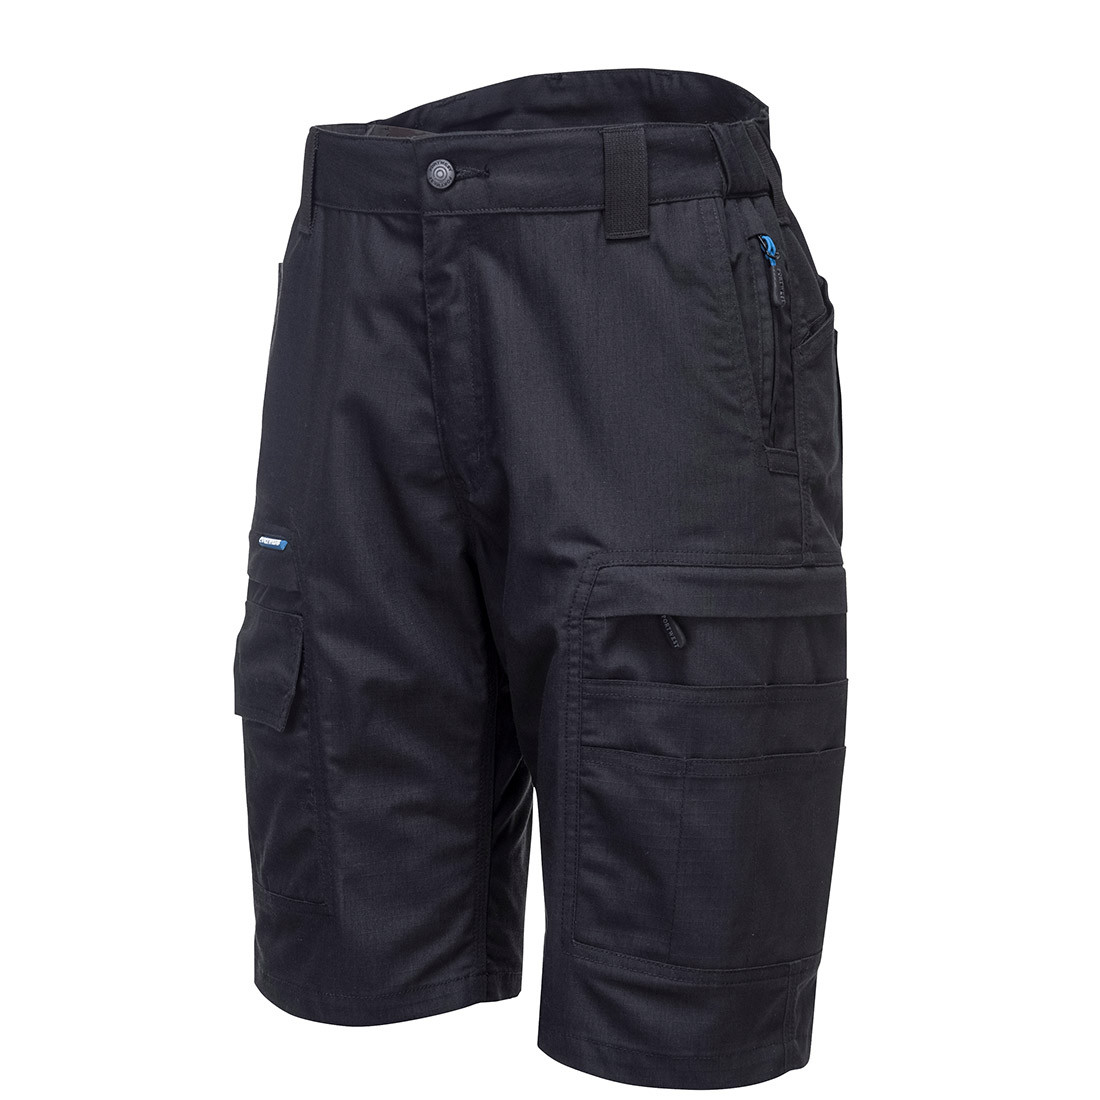 Pantaloni scurti Ripstop KX3 - Imbracaminte de protectie